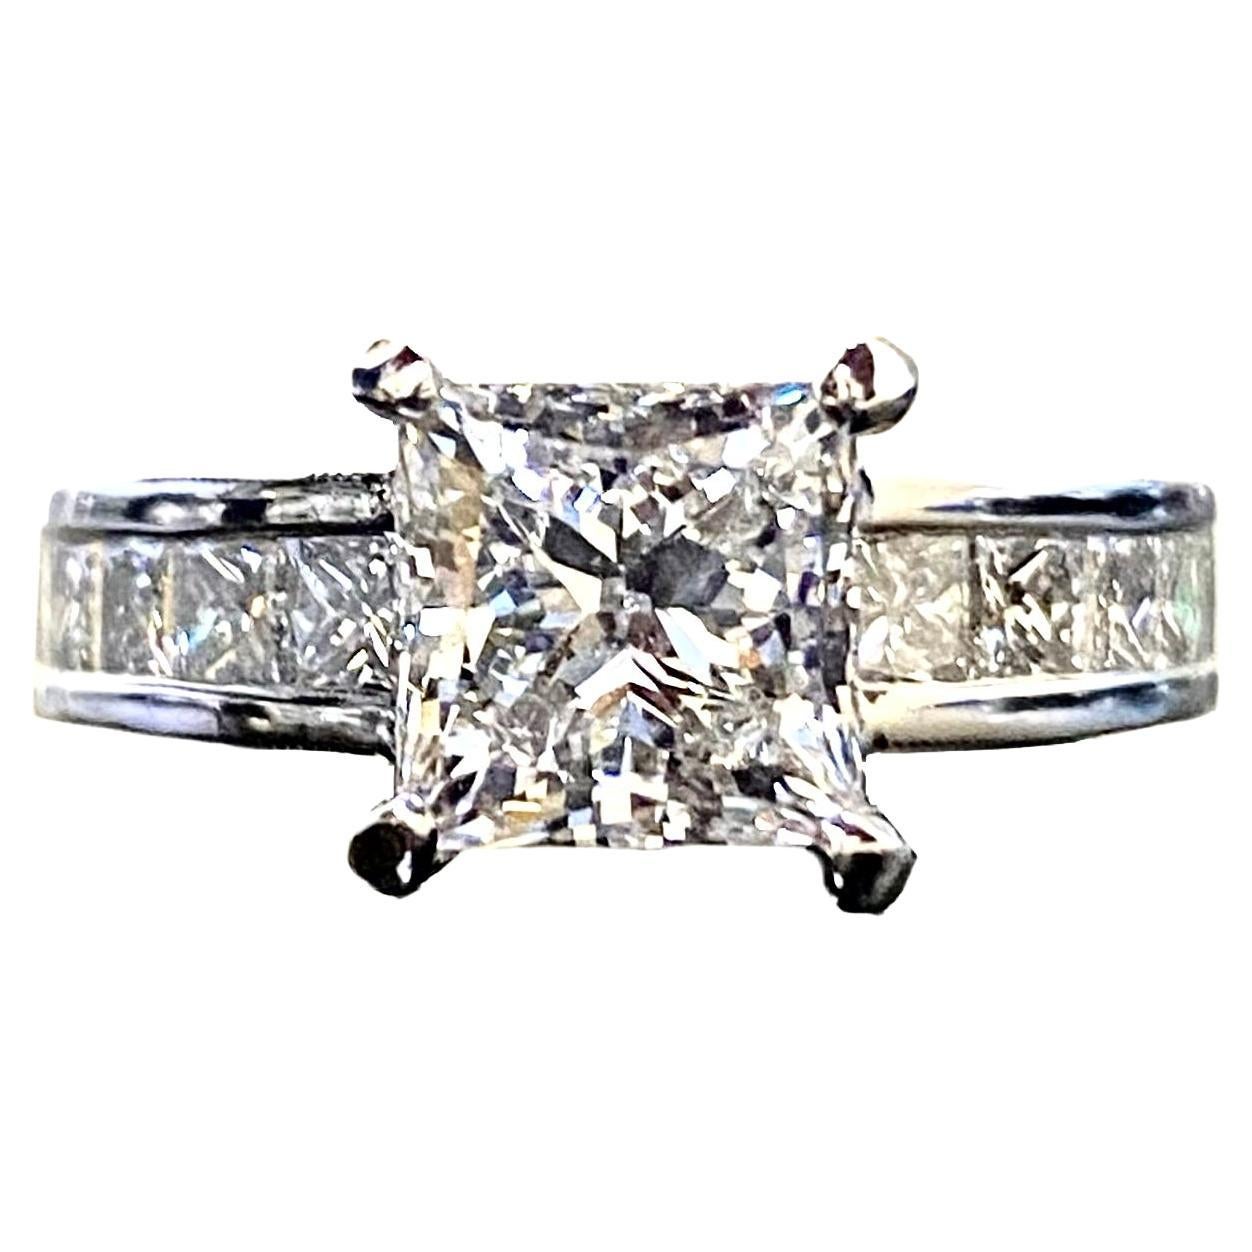 DeKara Designs Collection

Metal- 90% Platinum, 10% Iridium.

Stones- GIA Certified Princess Cut Diamond E Color SI1 Clarity 2.01 Carats, 12 Princess Cut Diamonds F-G Color VS1-VS2 Clarity 1.10 Carats.

Ring Comes With GIA Certificate.

GIA Report